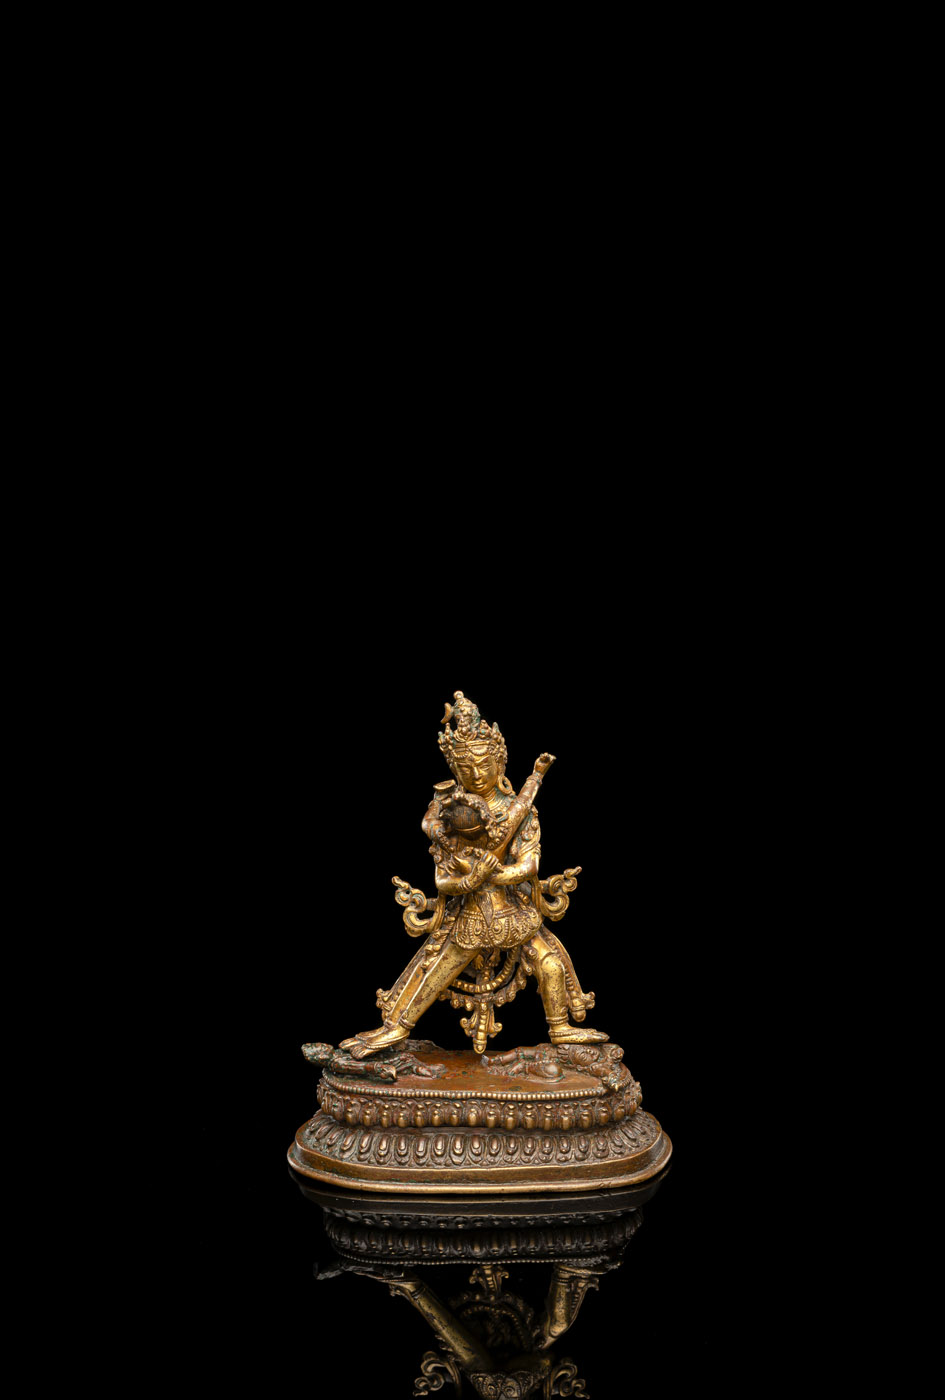 <b>Partiell feuervergoldete Bronze des Chakrasamvara und Vajravarahi</b>